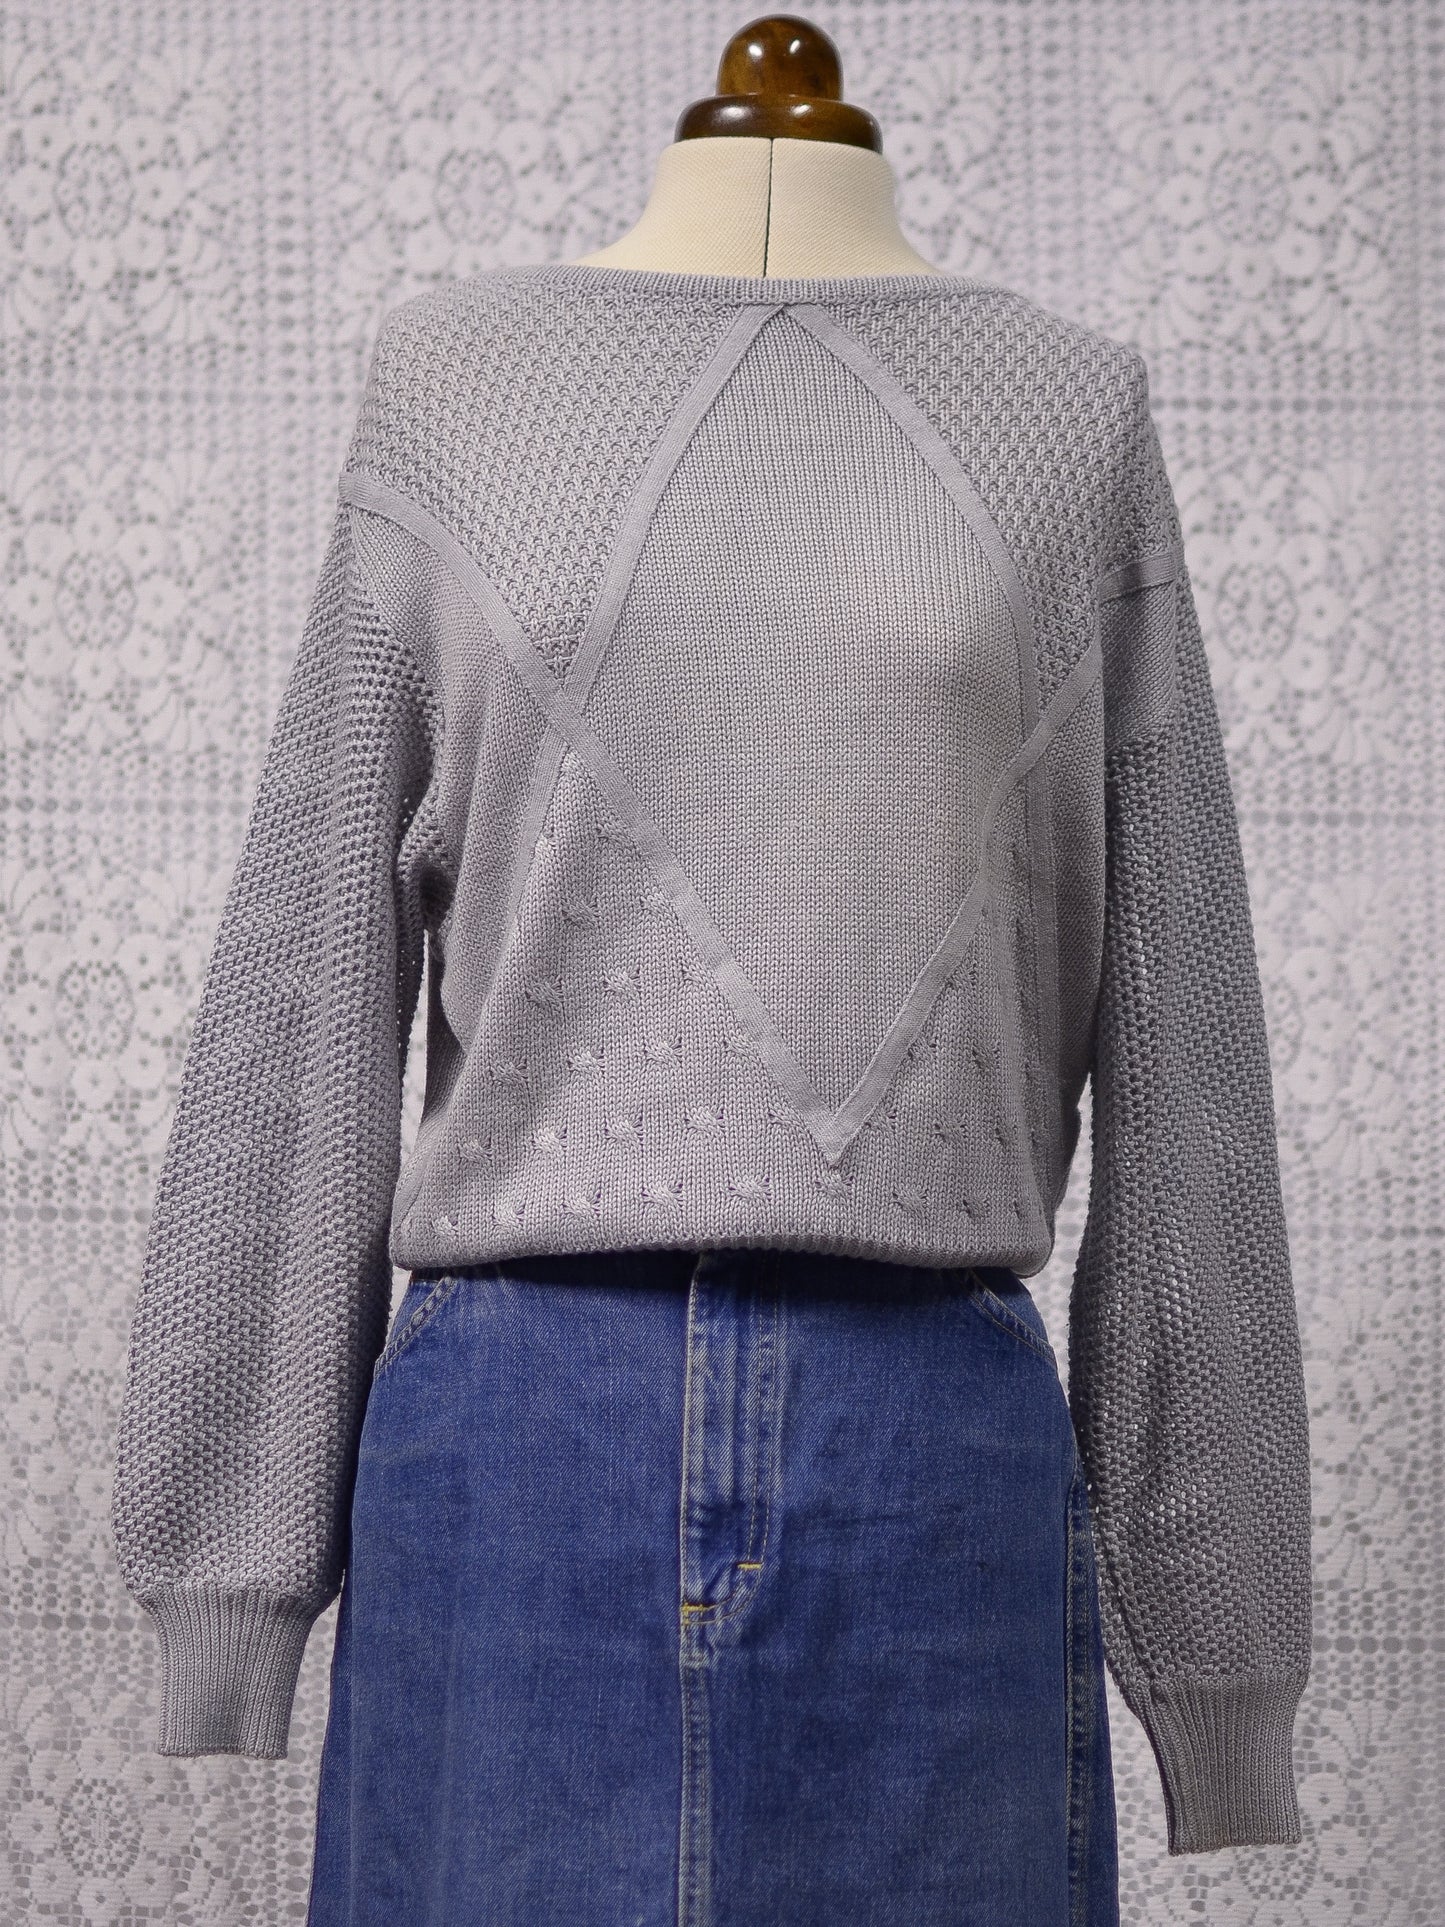 1980s light grey diamond pattern jumper